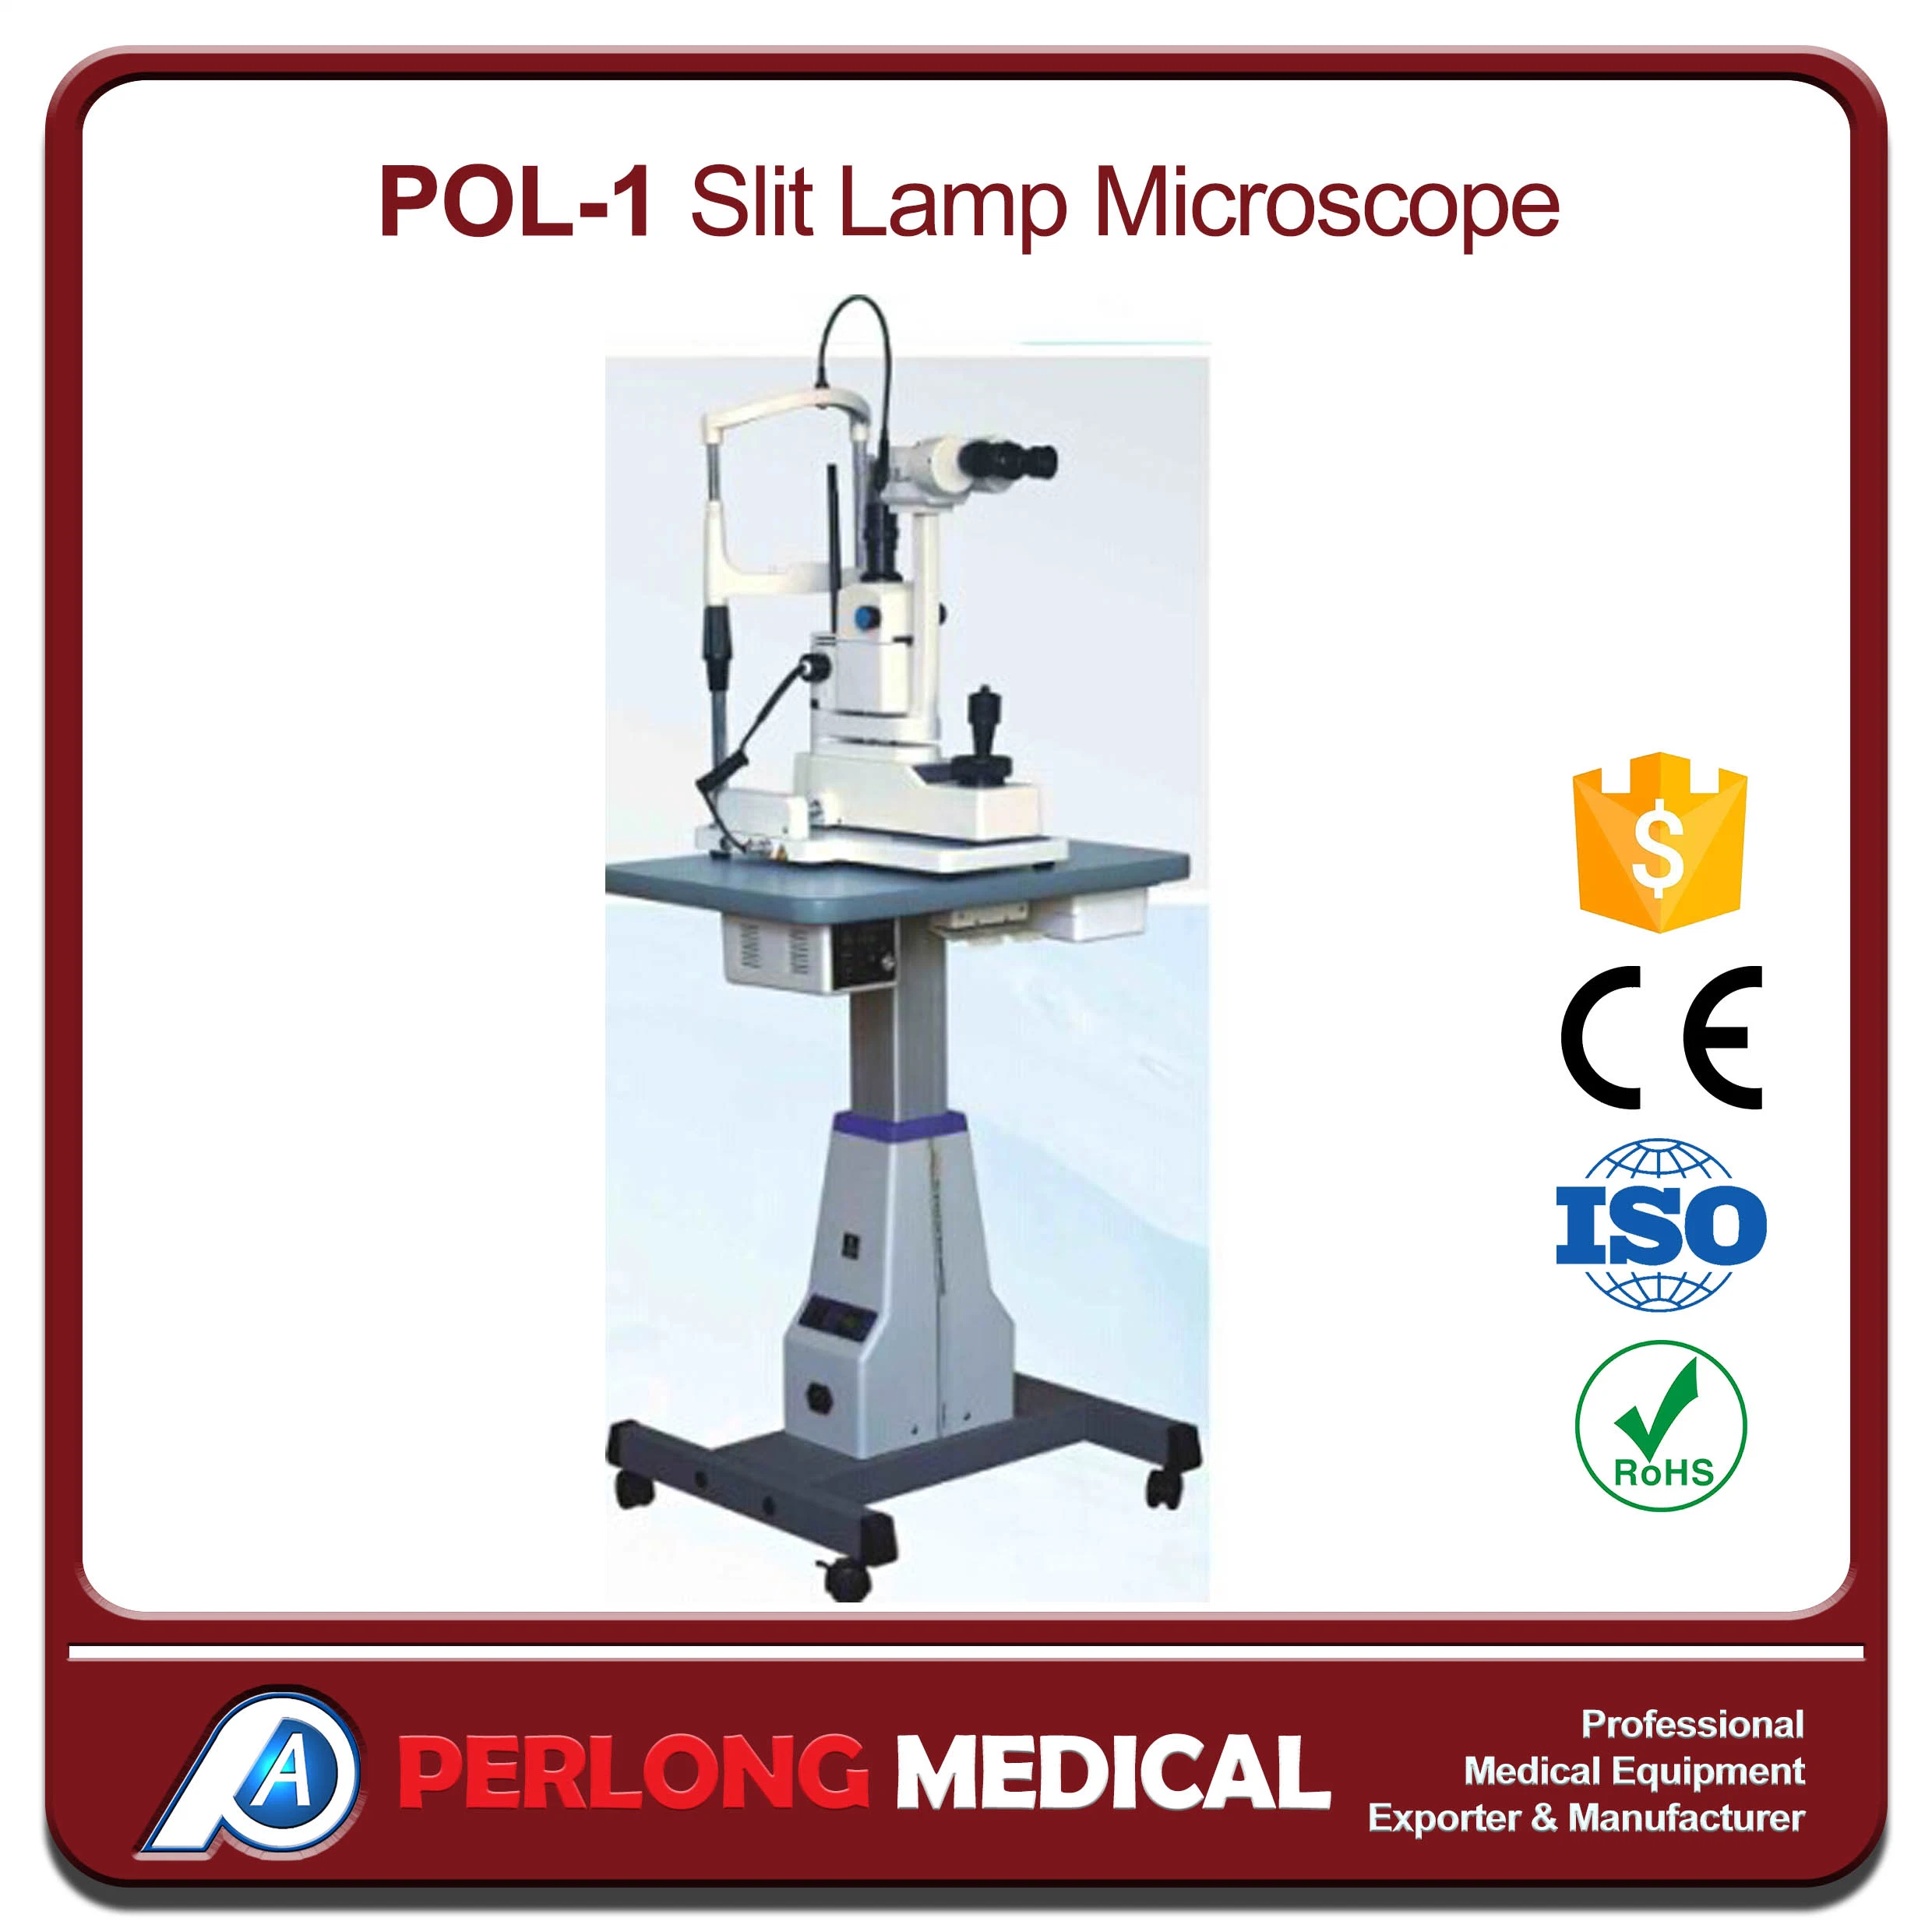 Pol-1 High quality/High cost performance Digital Slit Lamp Microscope